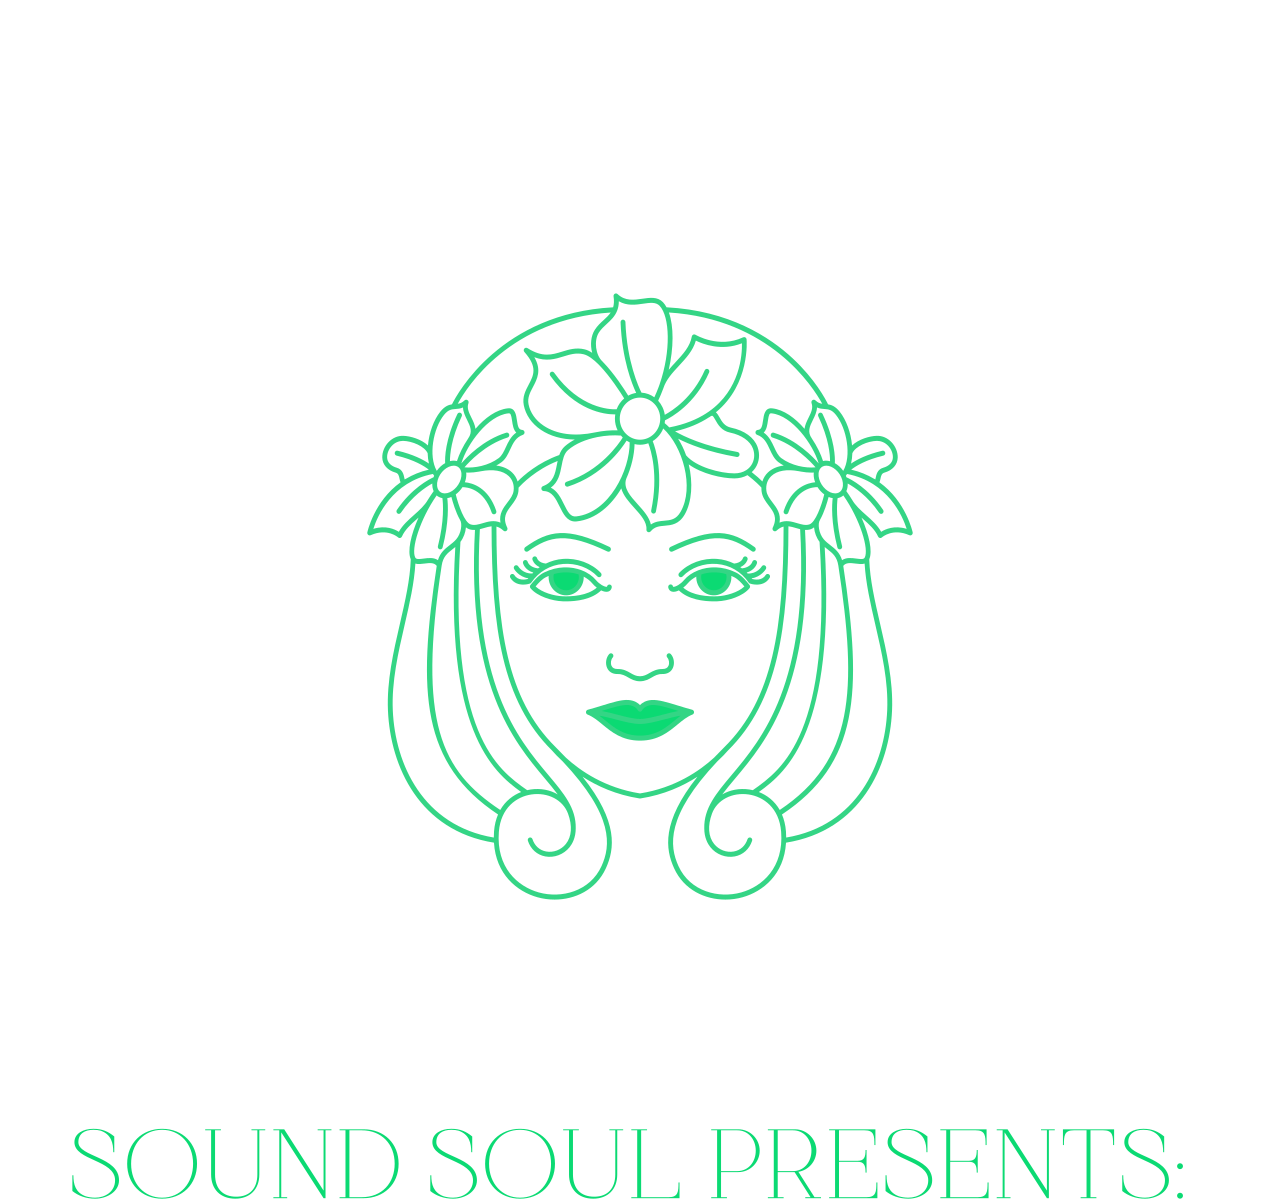 SOUND SOUL PRESENTS: 's logo